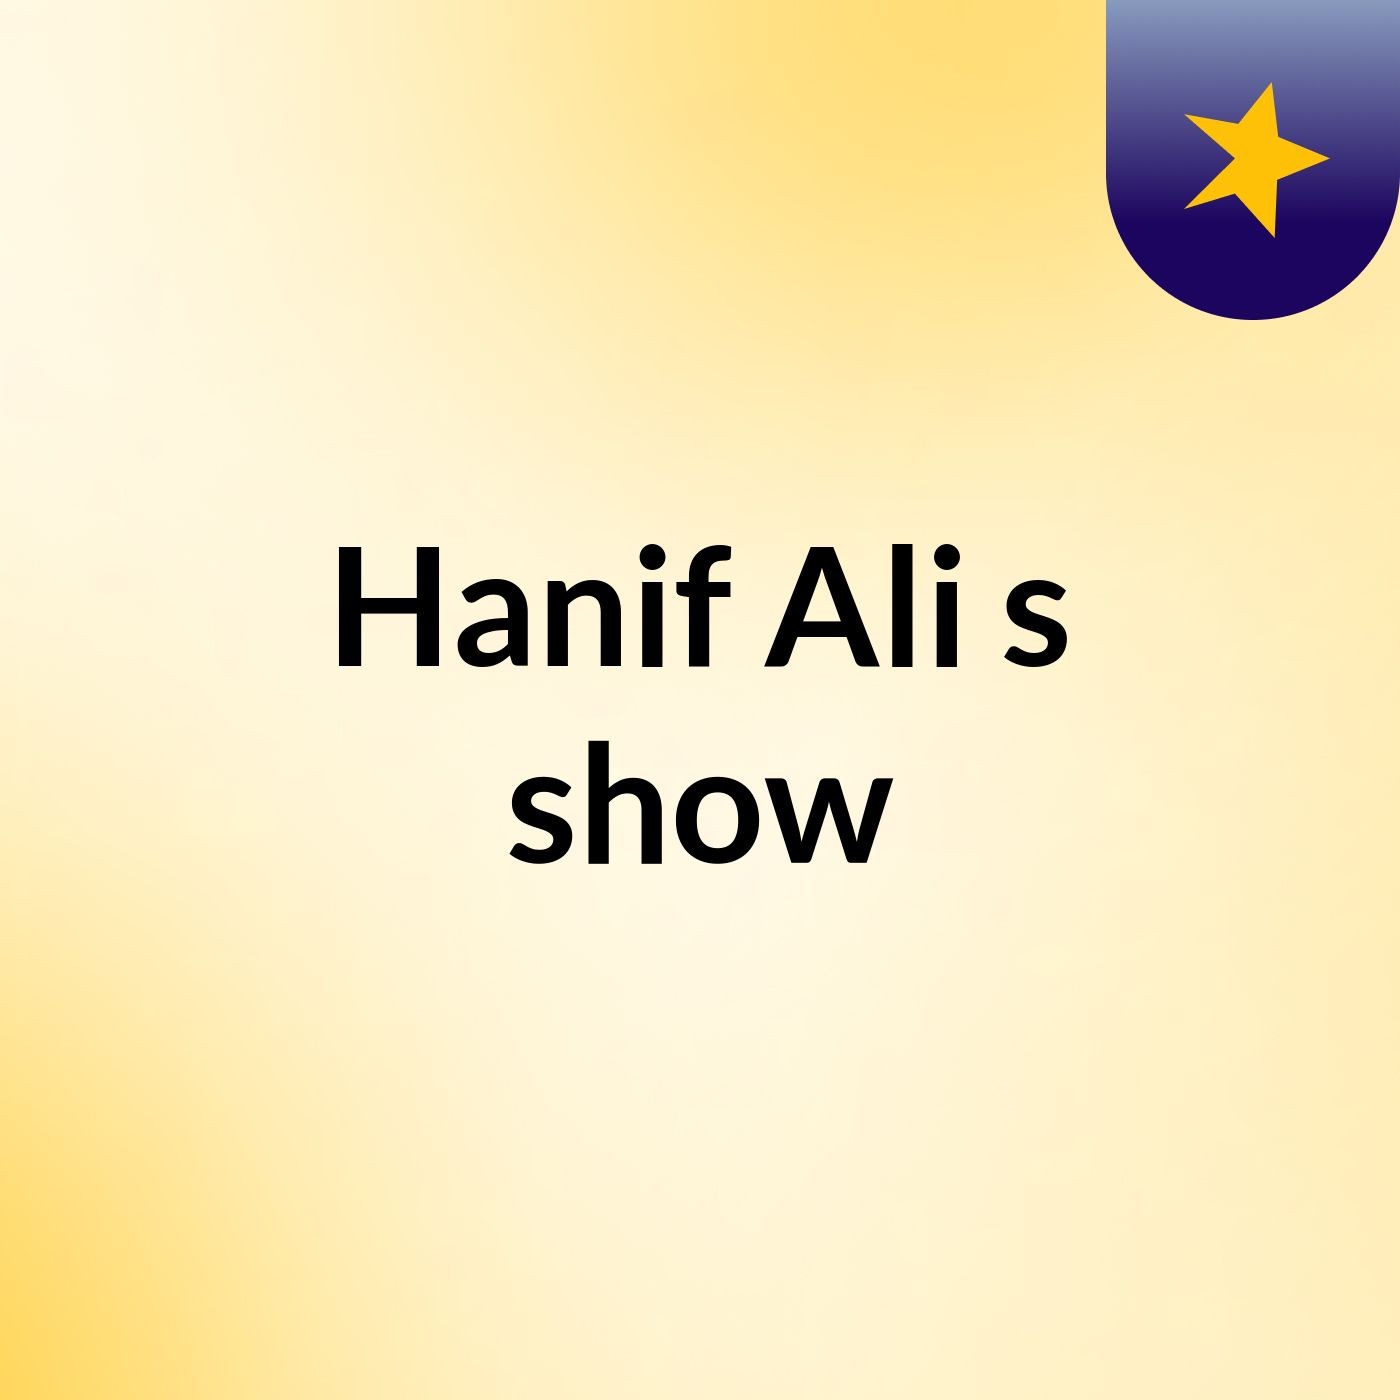 Hanif Ali's show